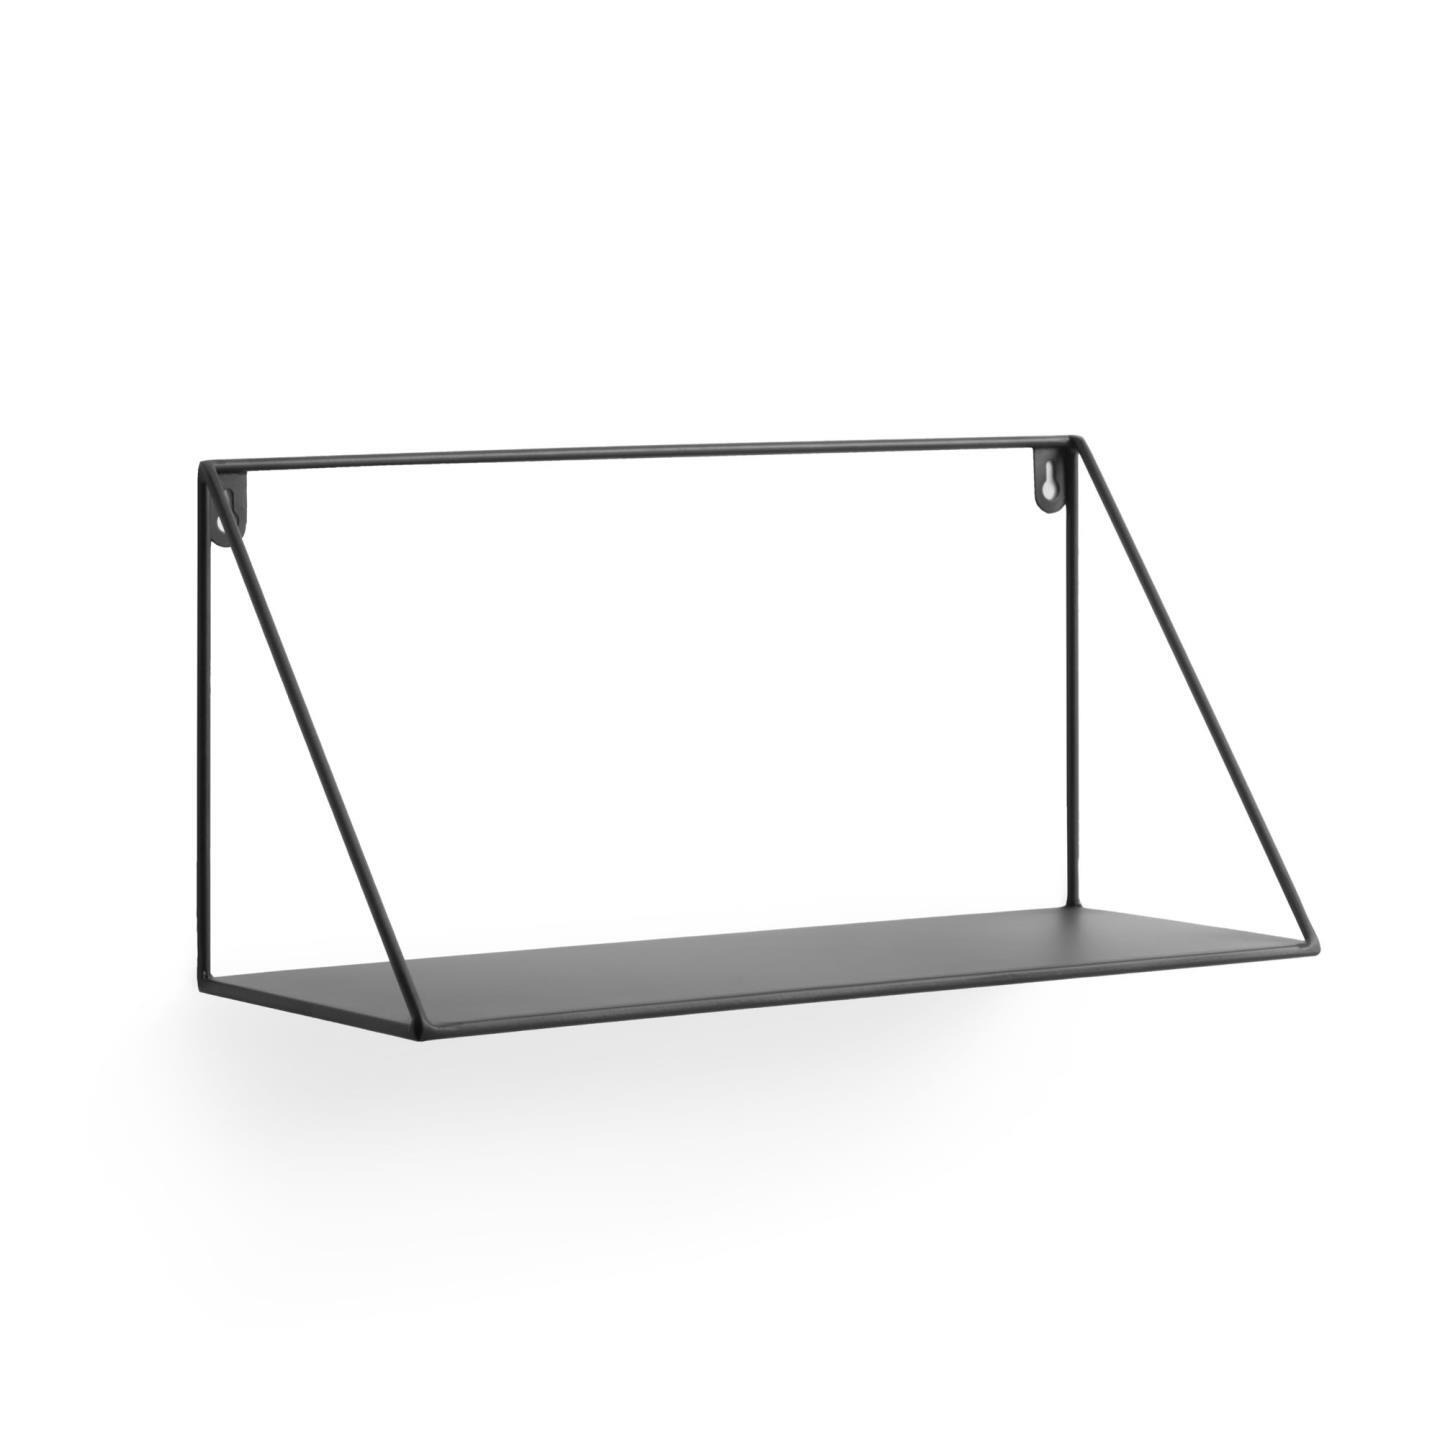 Teg triangular shelf in steel with black finish 40 x 20 cm